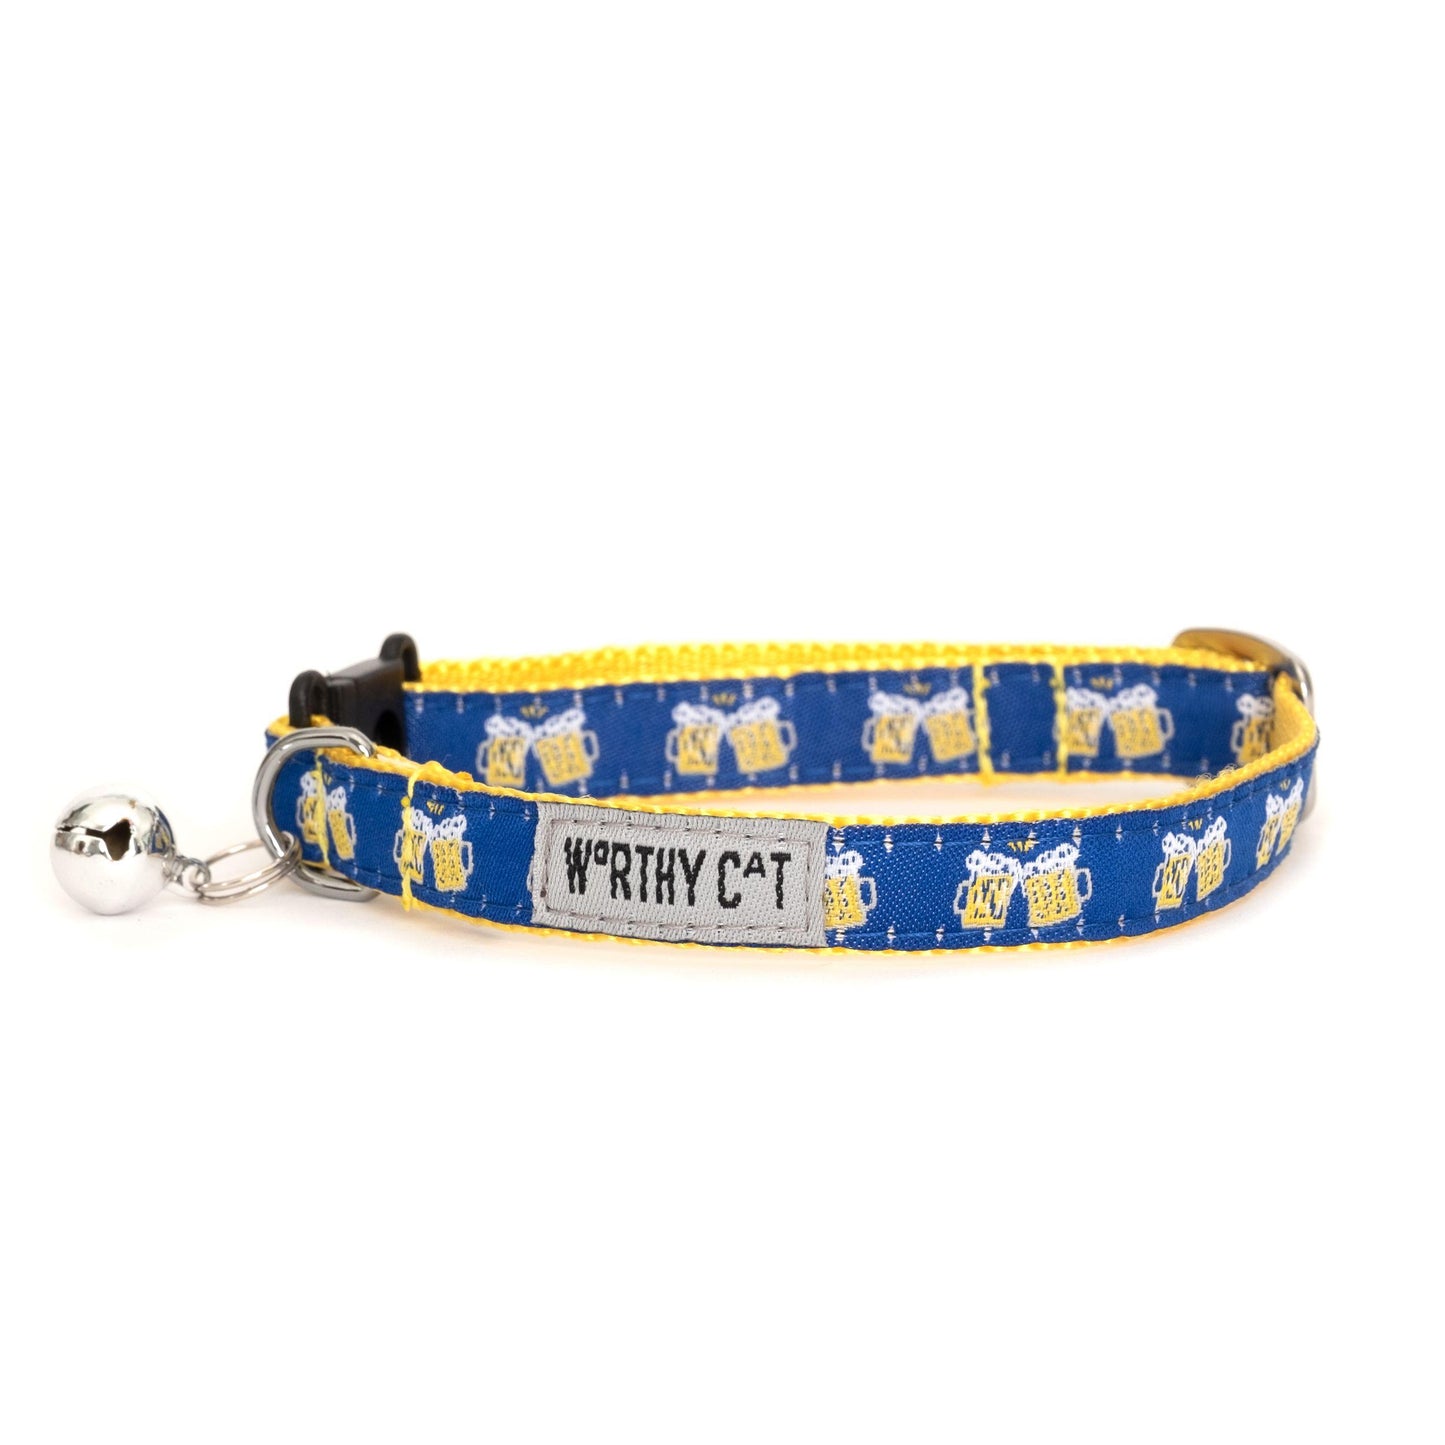 The Worthy Dog Cheers Breakaway Adjustable Cat Collar